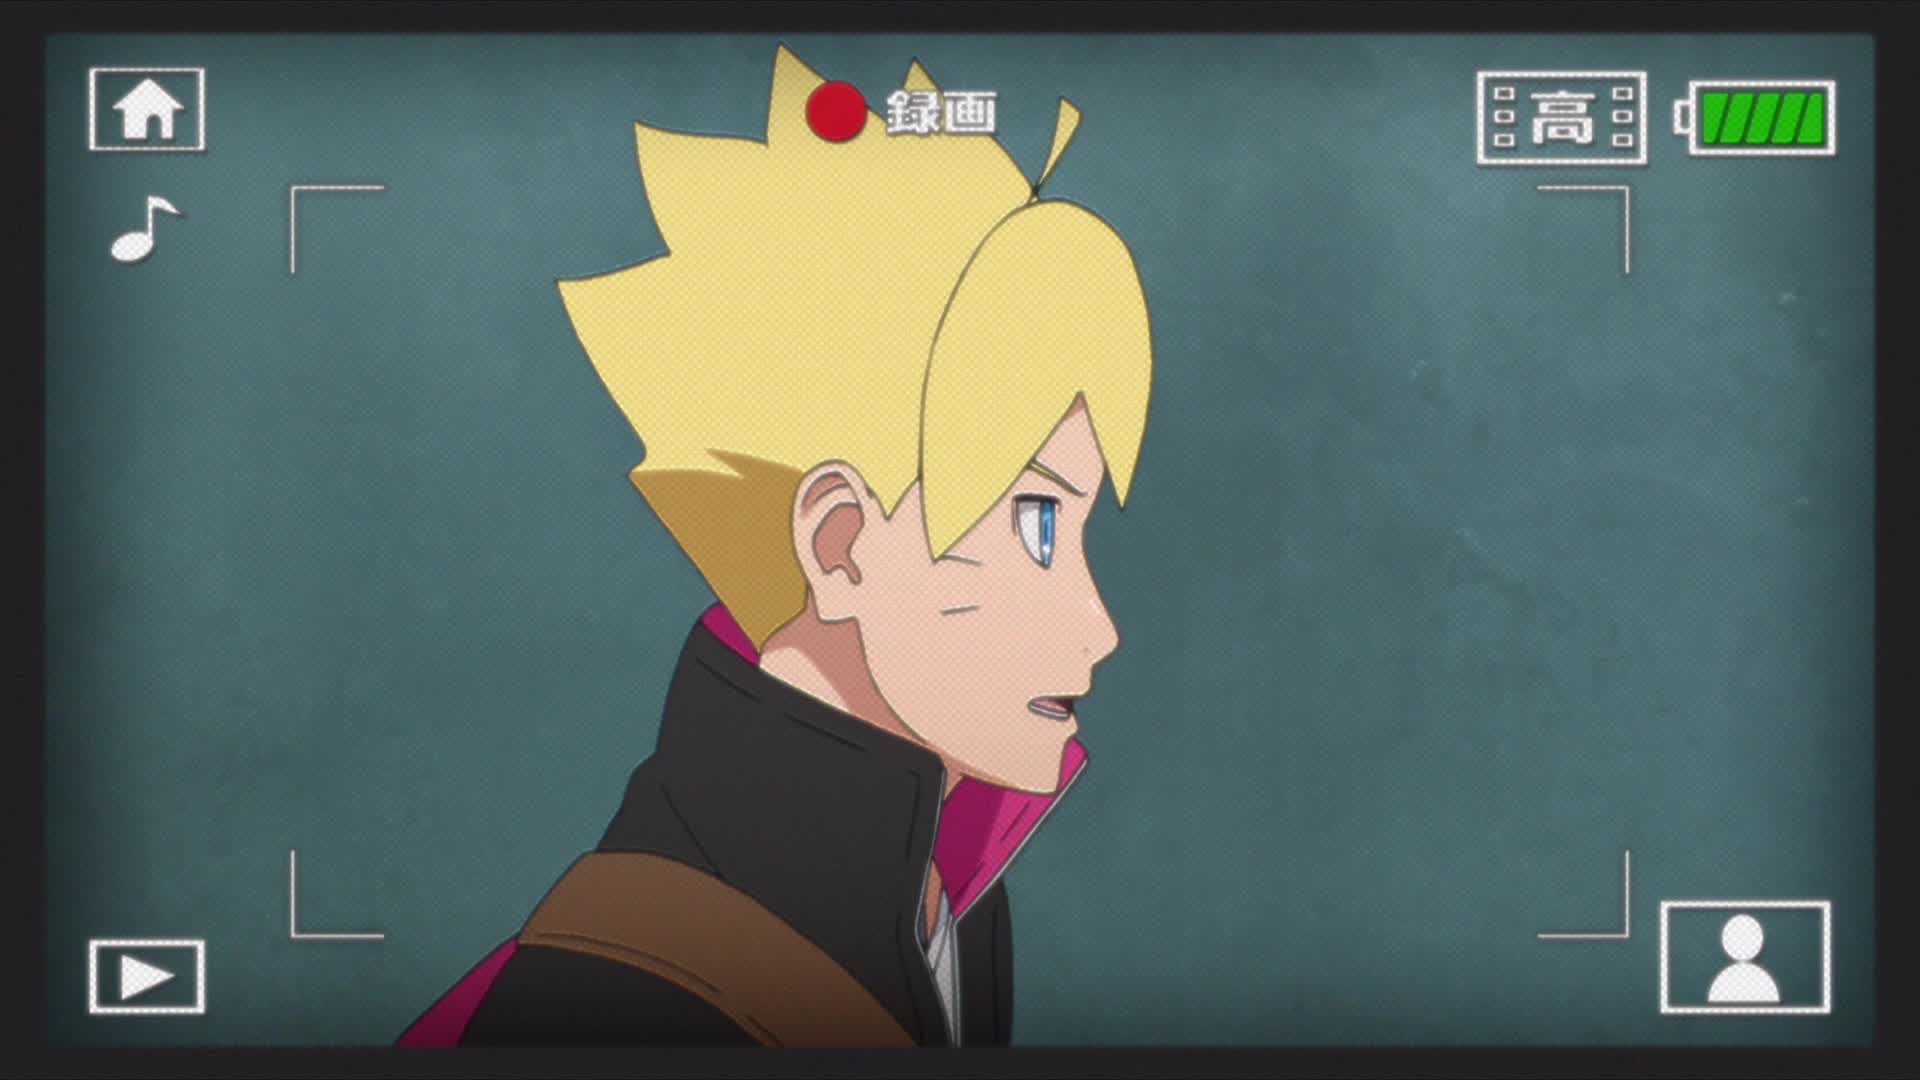 Ver Boruto: Naruto Next Generations temporada 1 episodio 51 en